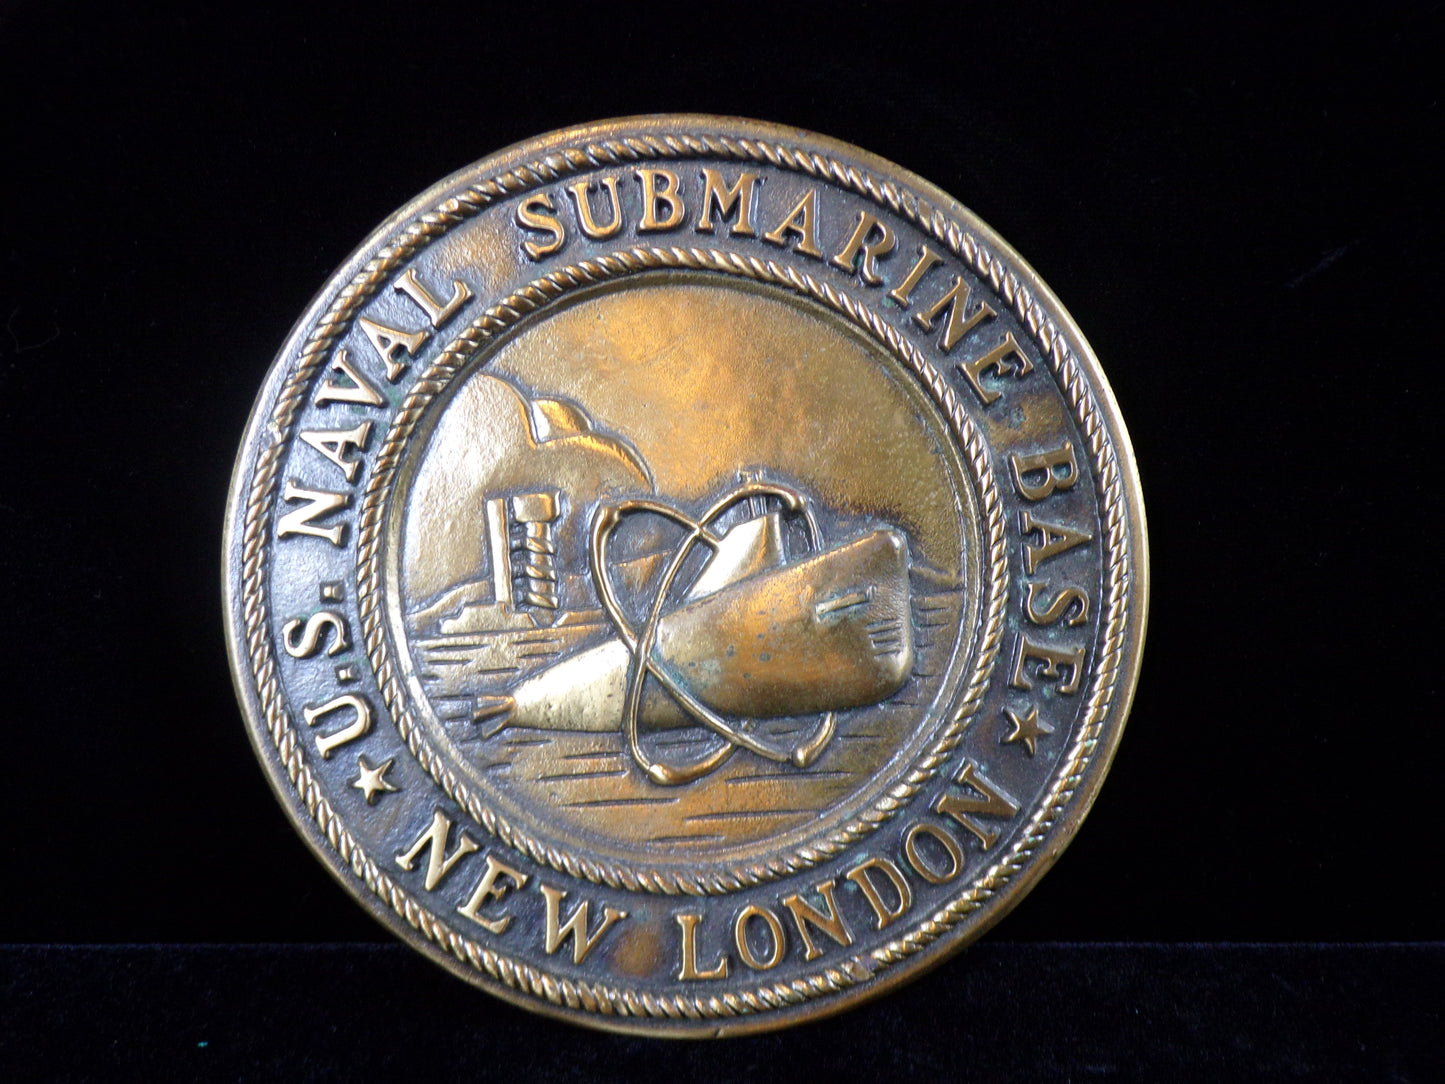 U.S. Naval Submarine Base New London, Solid Brass Plaque